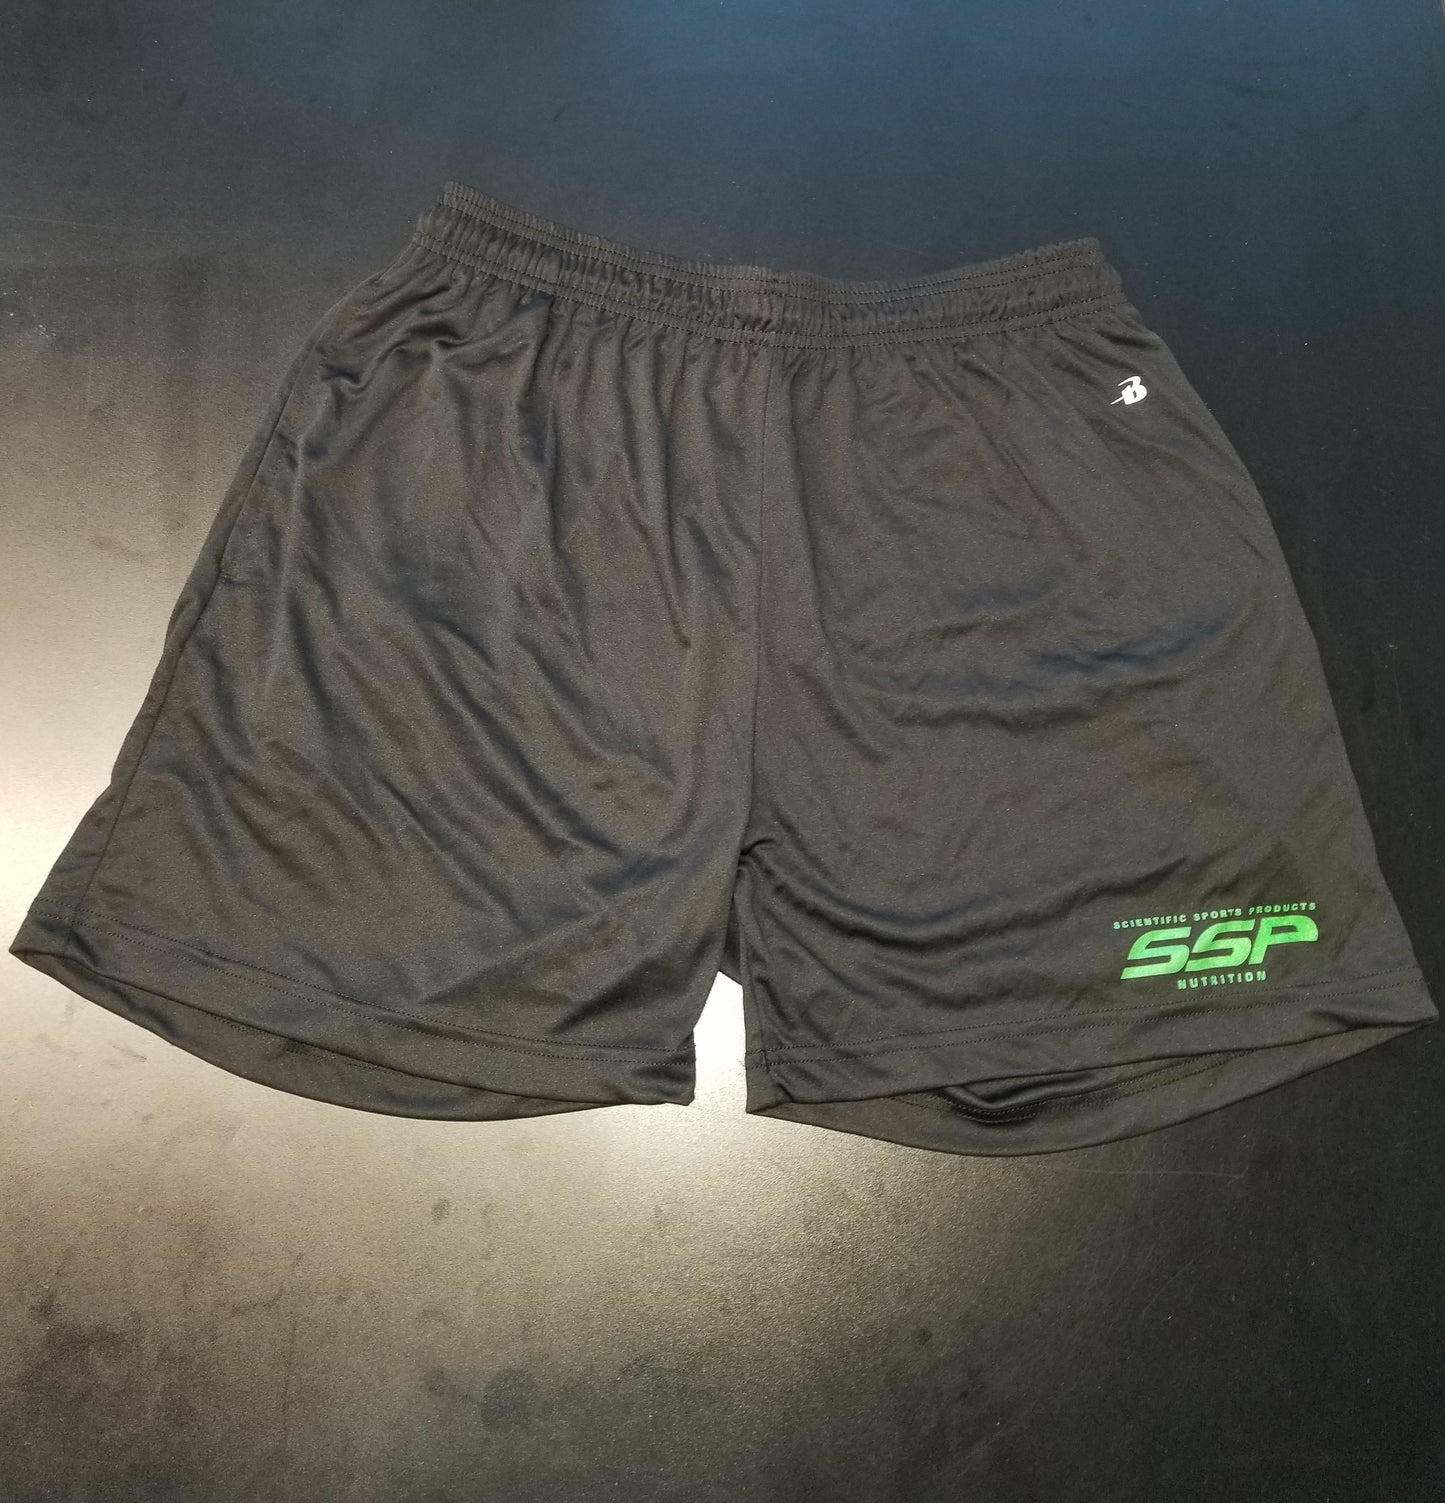 Athletic SSP shorts